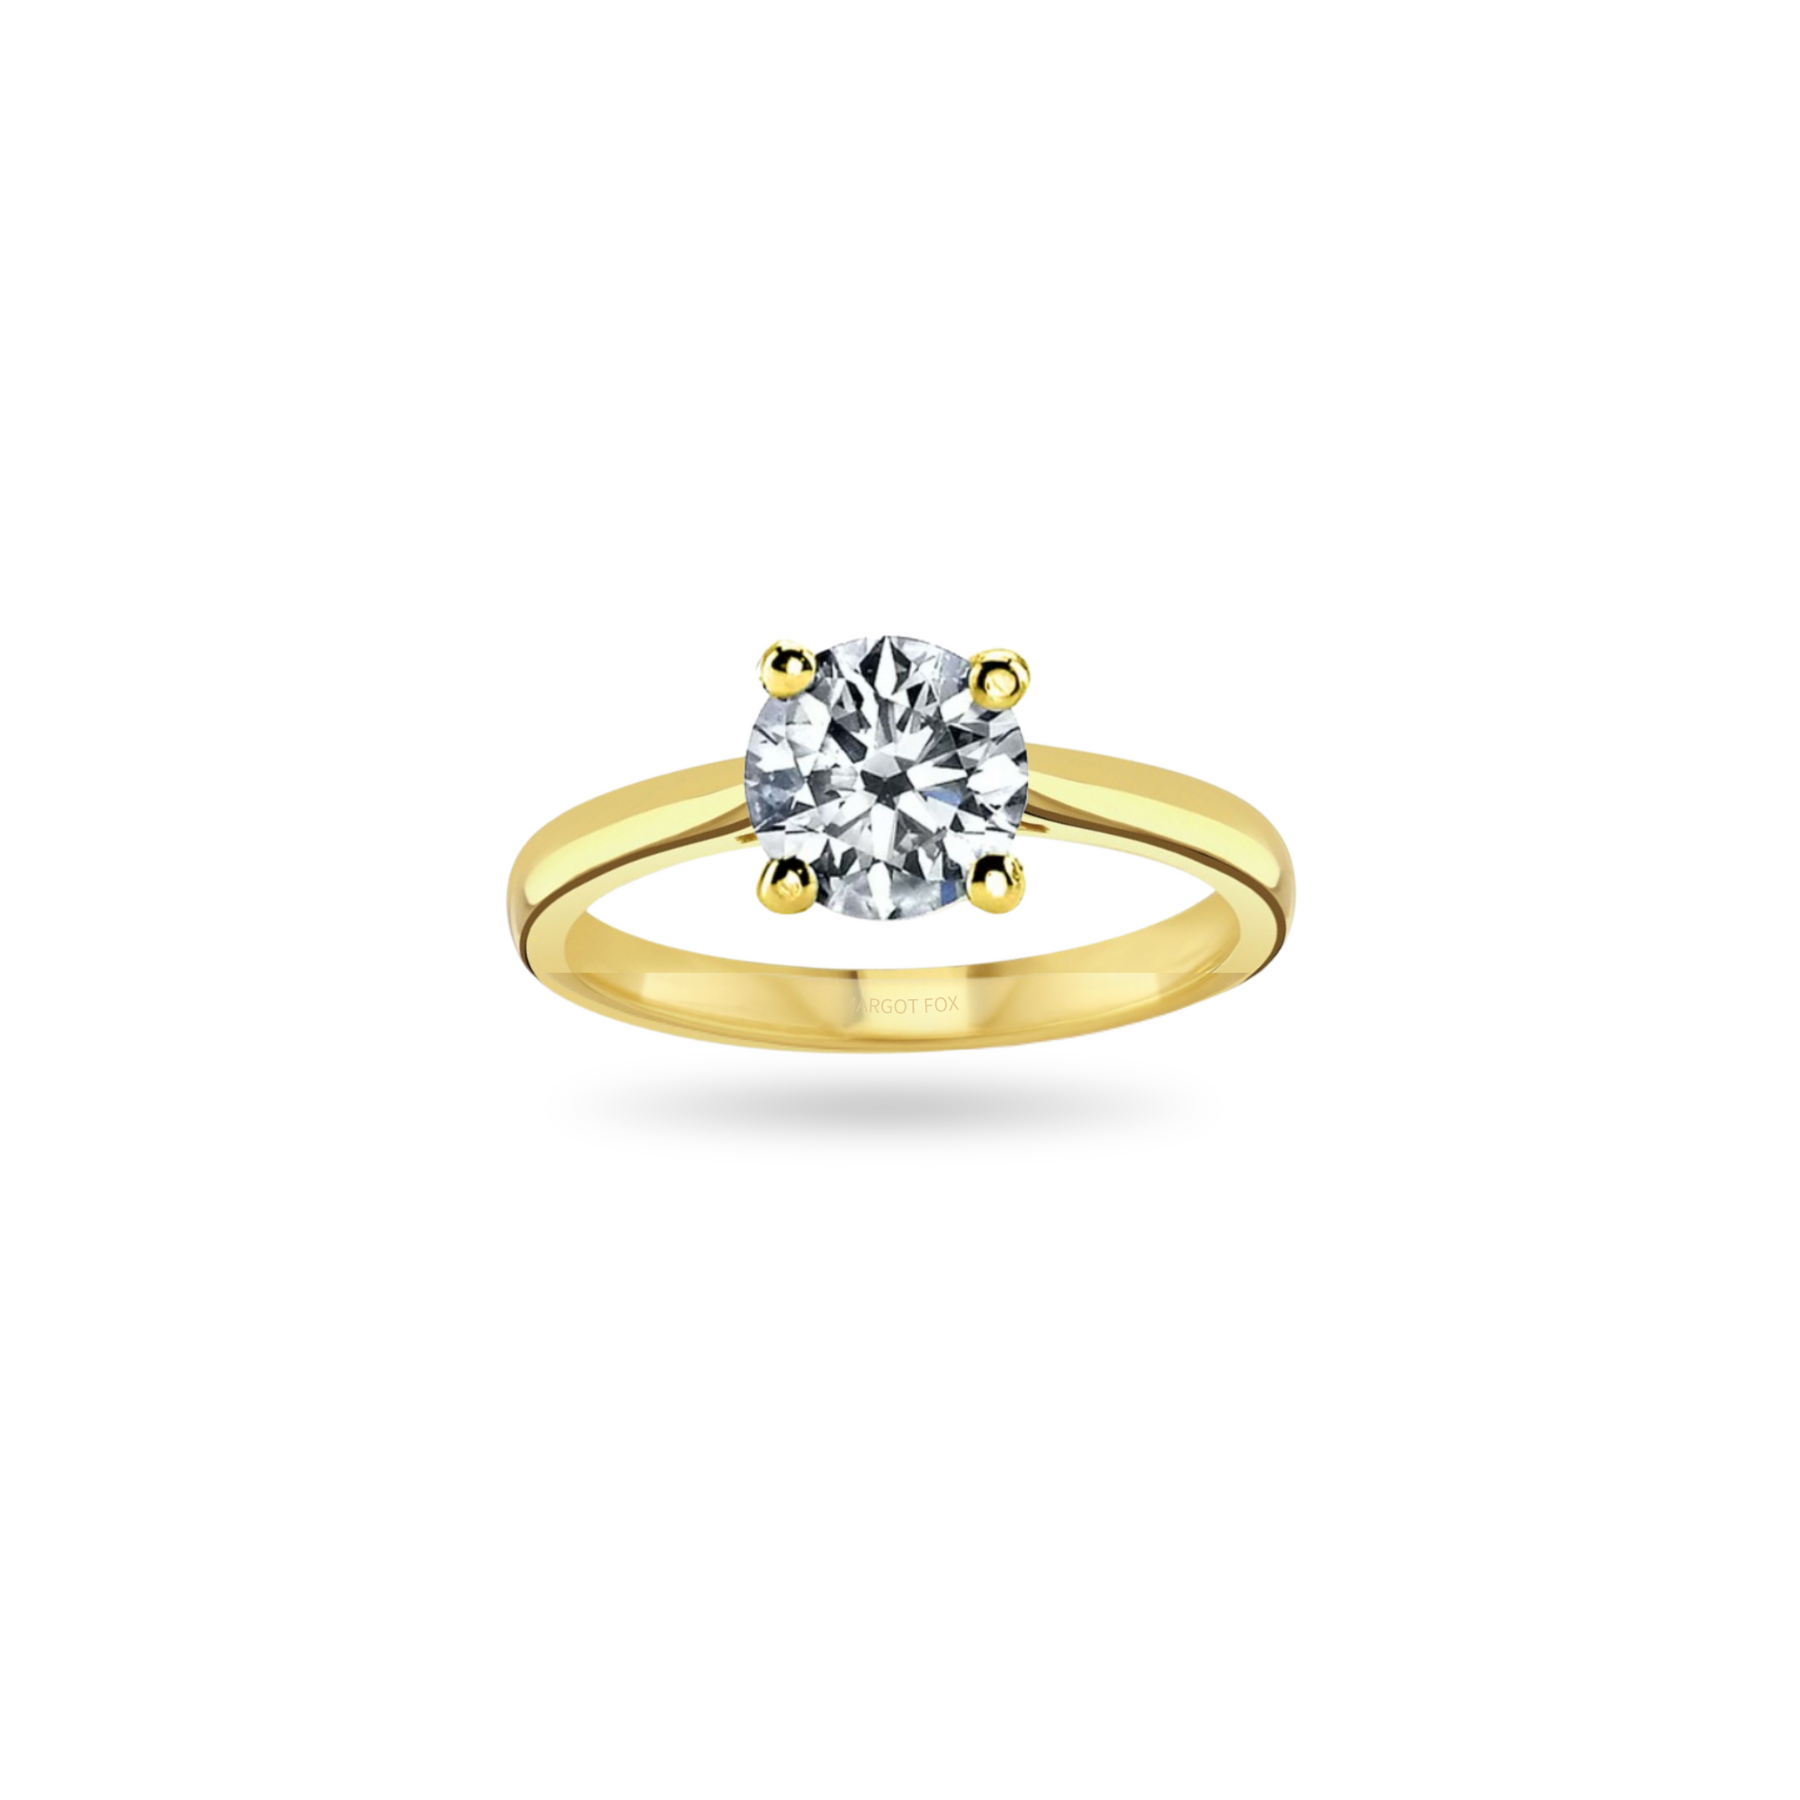 Forever Classic 1ct Brilliant Diamond Solitaire 18ct Gold Ring